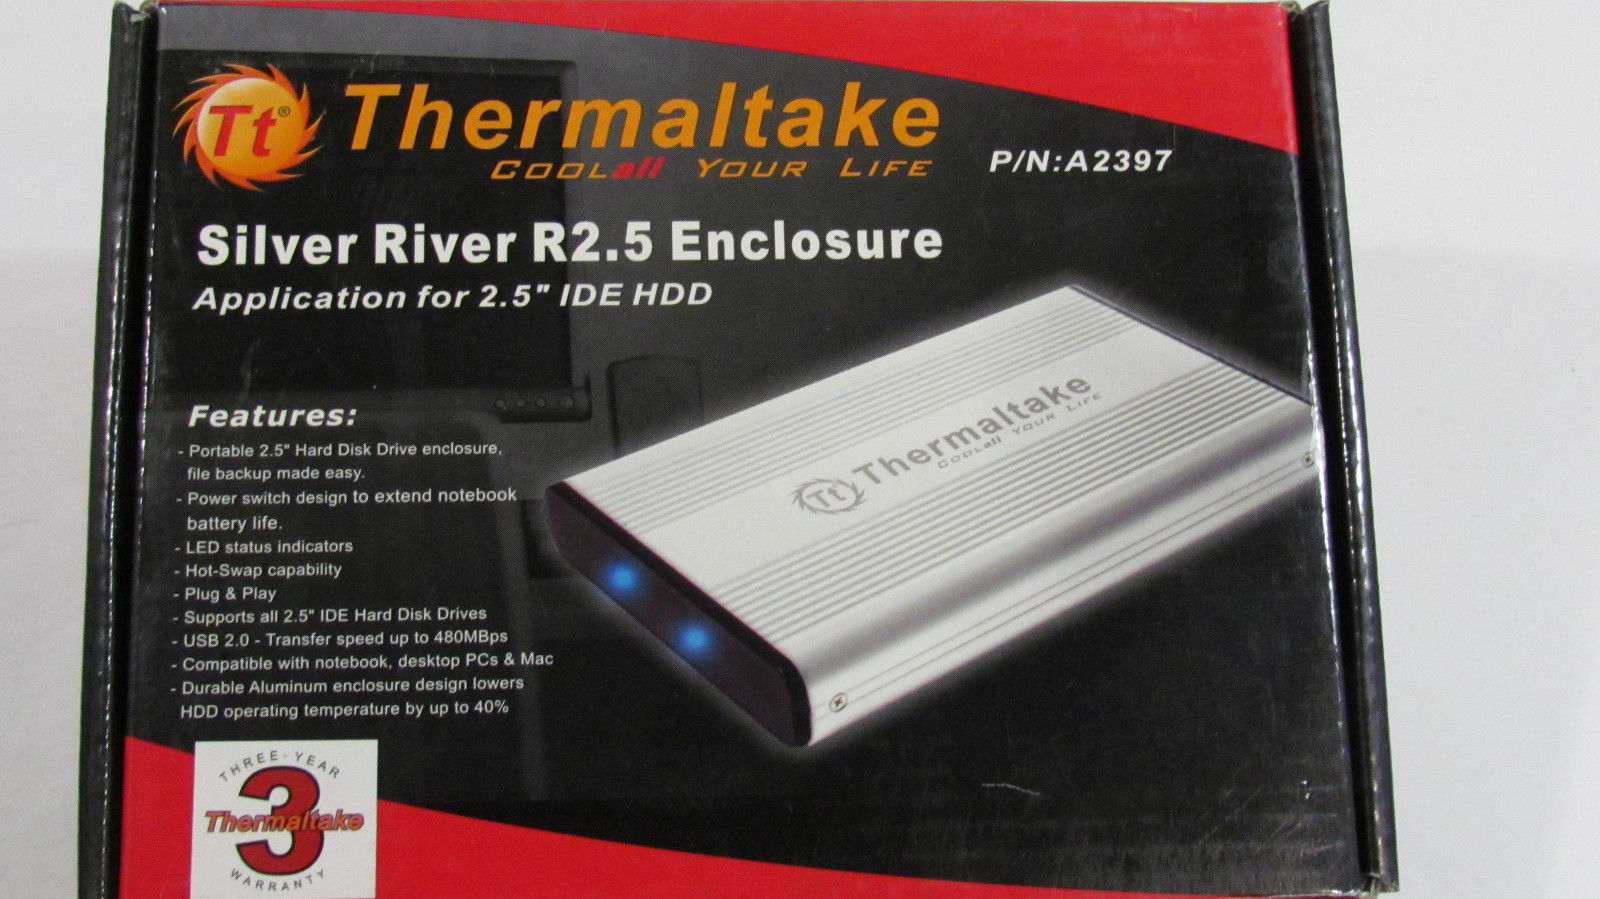 Thermaltake Silver River R2.5 Enclosure A2397 - $18.90